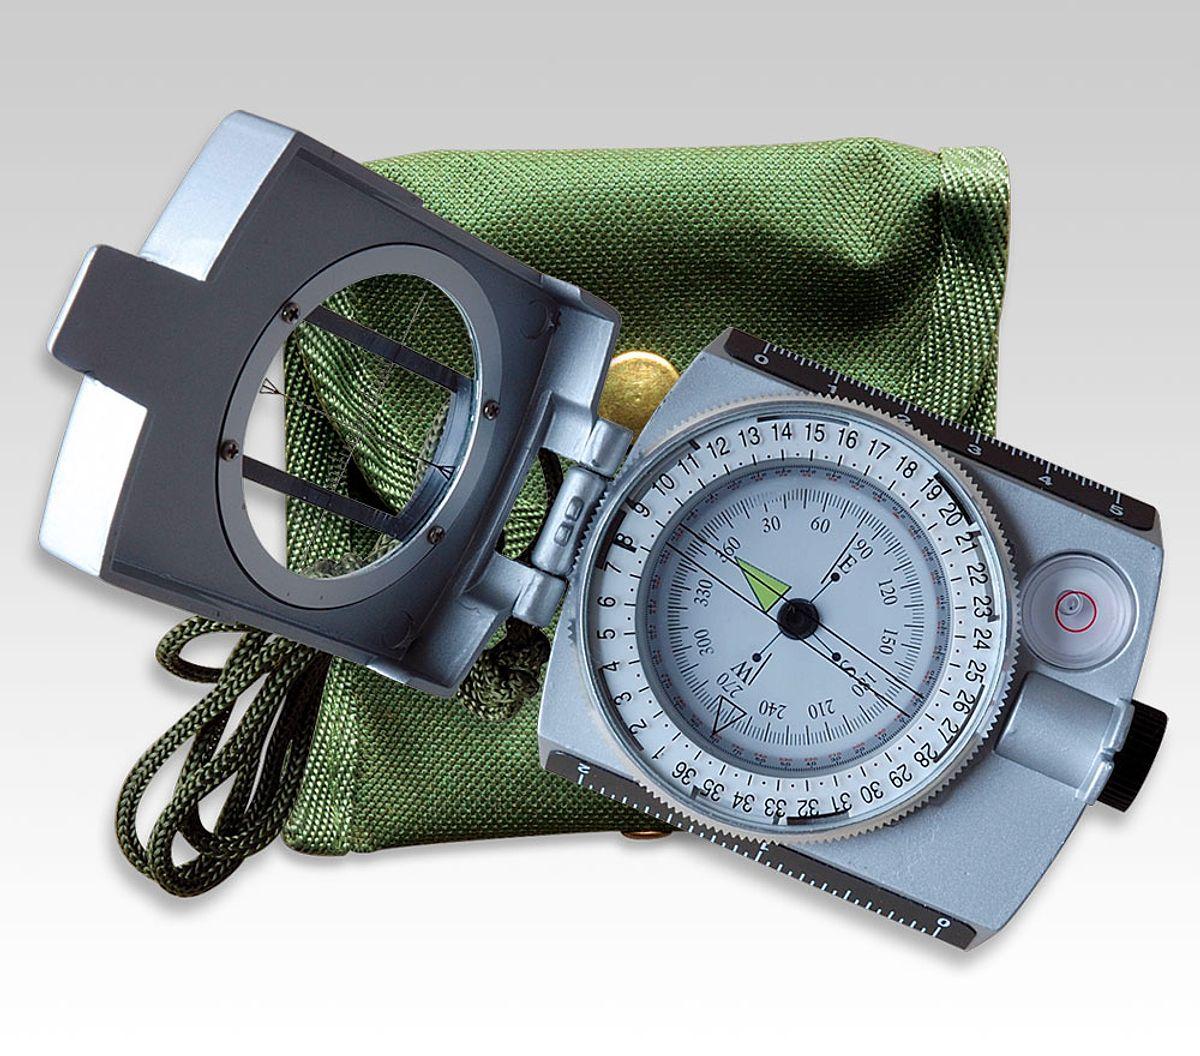 Compass 5. Армейский компас Military Compass с металлическим корпусом 3103. Компас финский армейский Suunto 1930е.